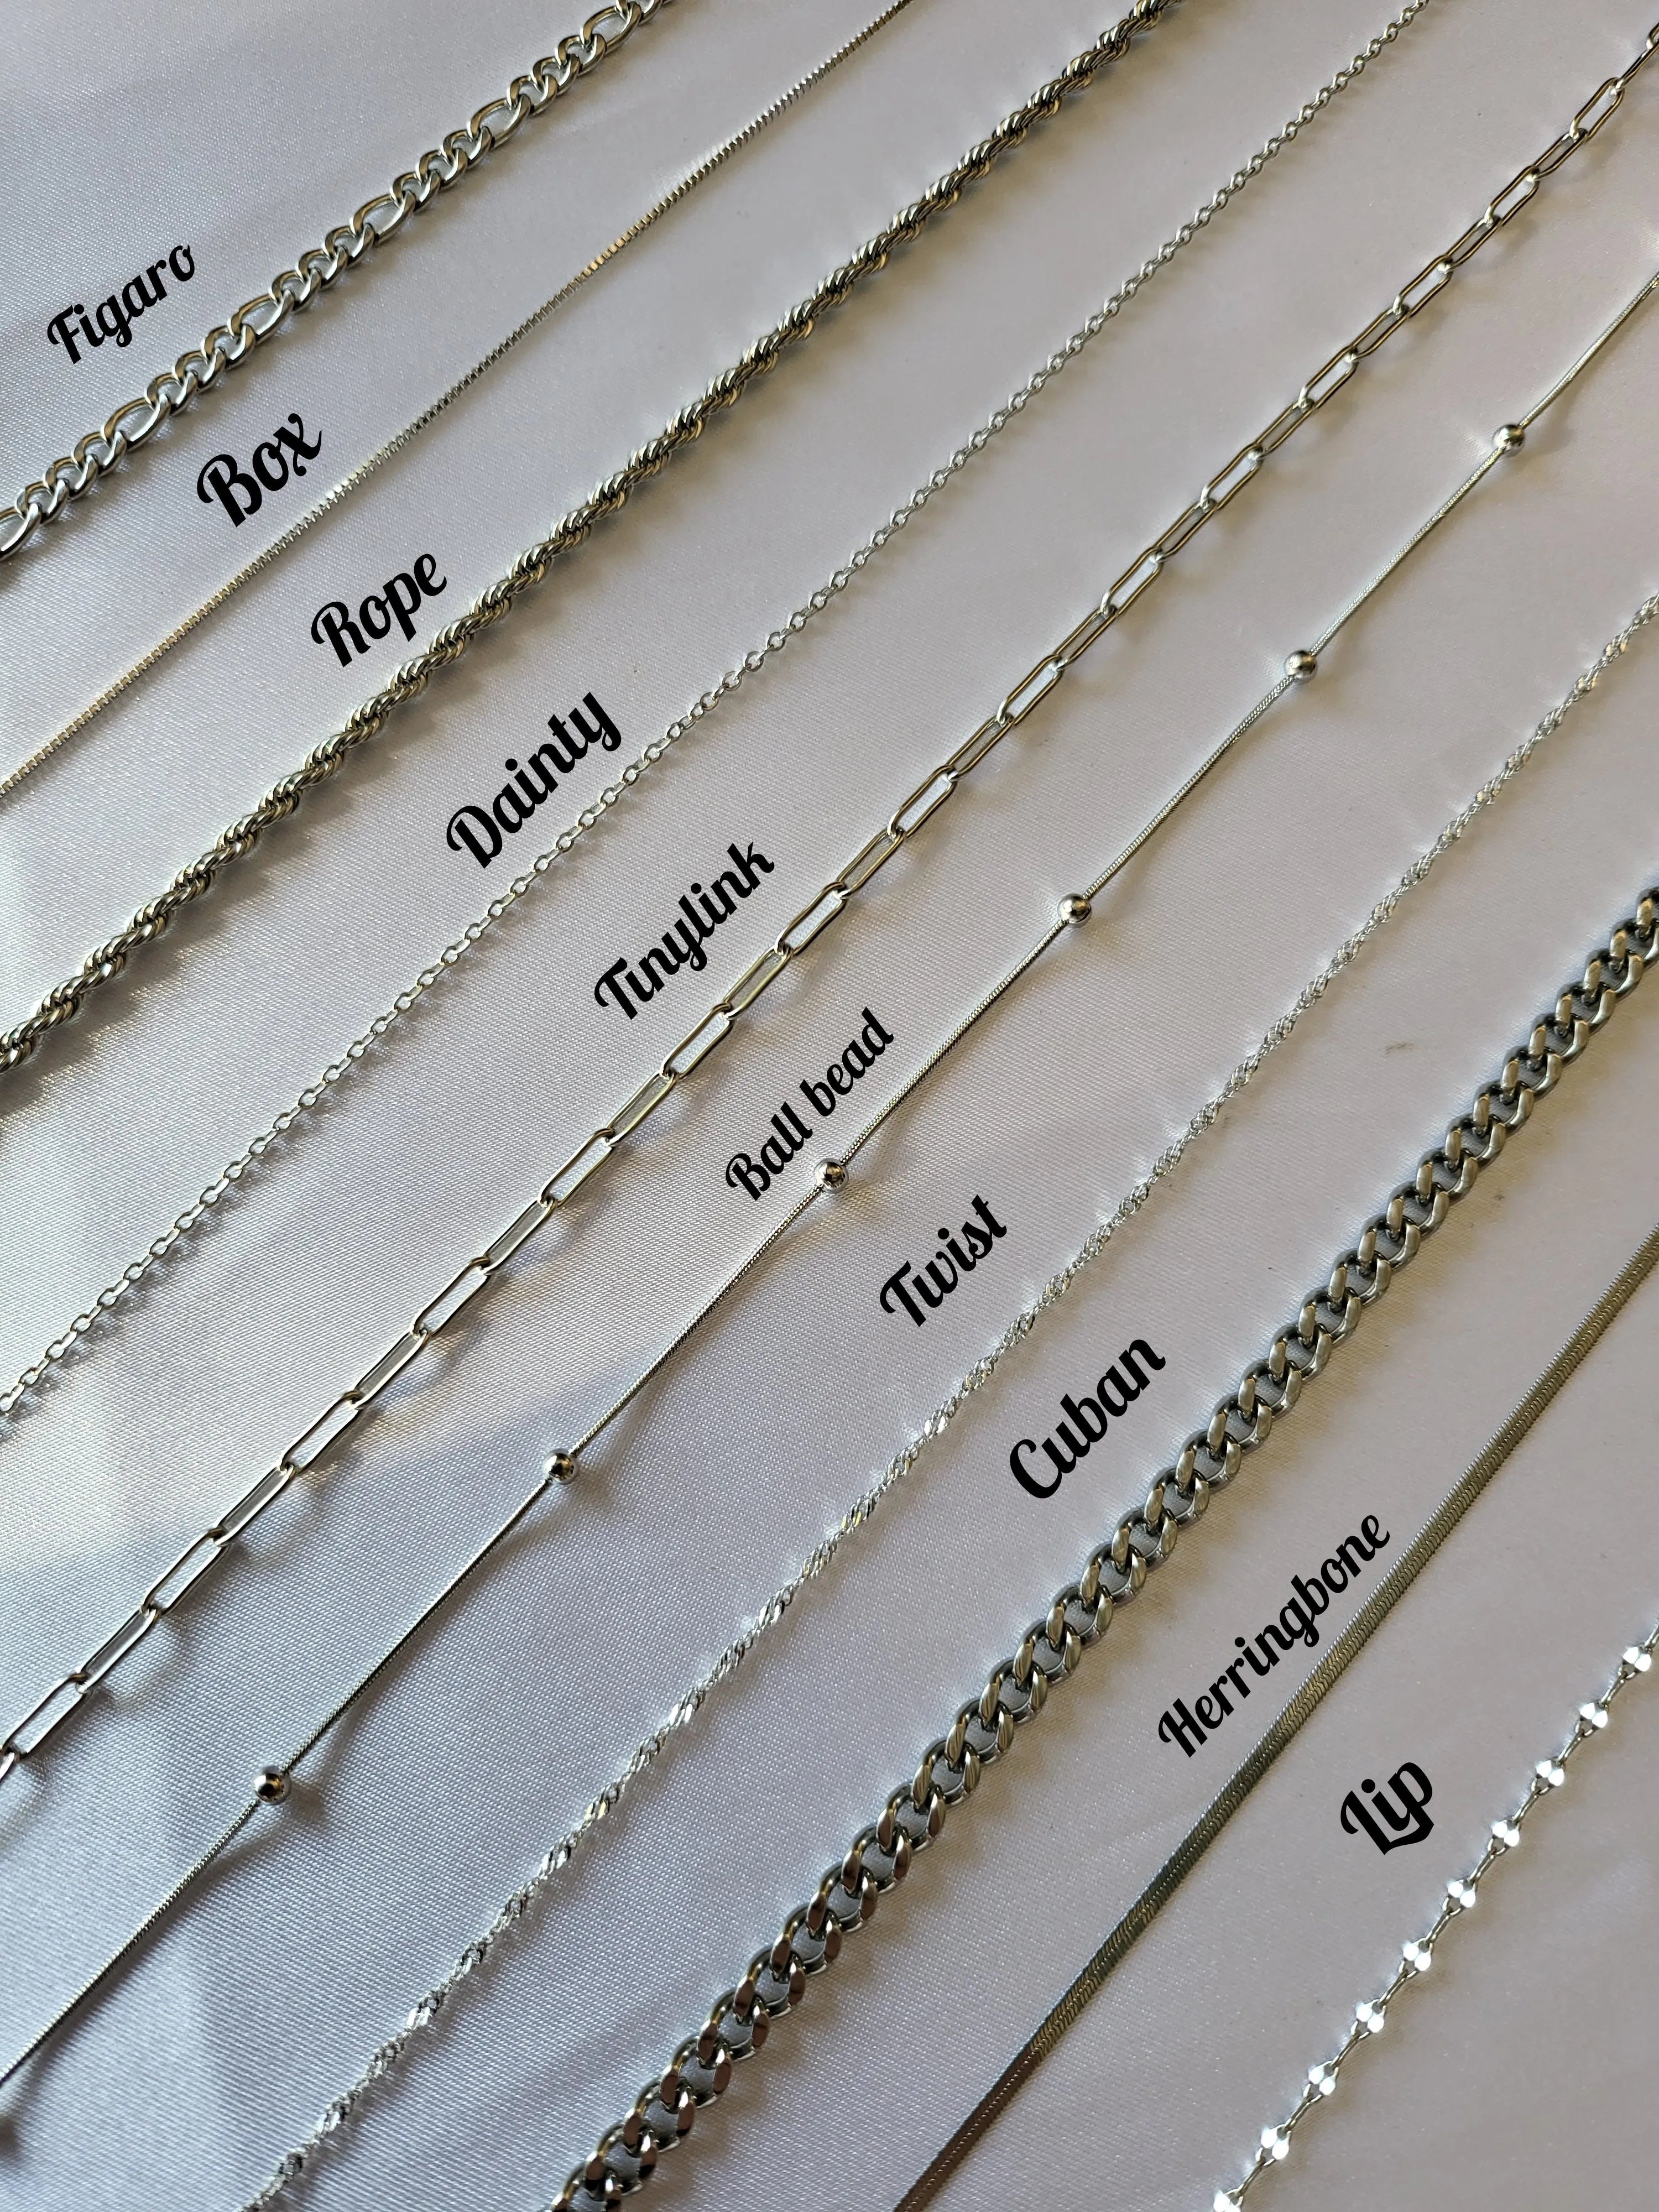 Silver Jewelry Chain Types, from top to bottom: Figaro; Box; Rope; Dainty; Tinylink; Ball Bead; Twist; Cuban; Herringbone; Lip